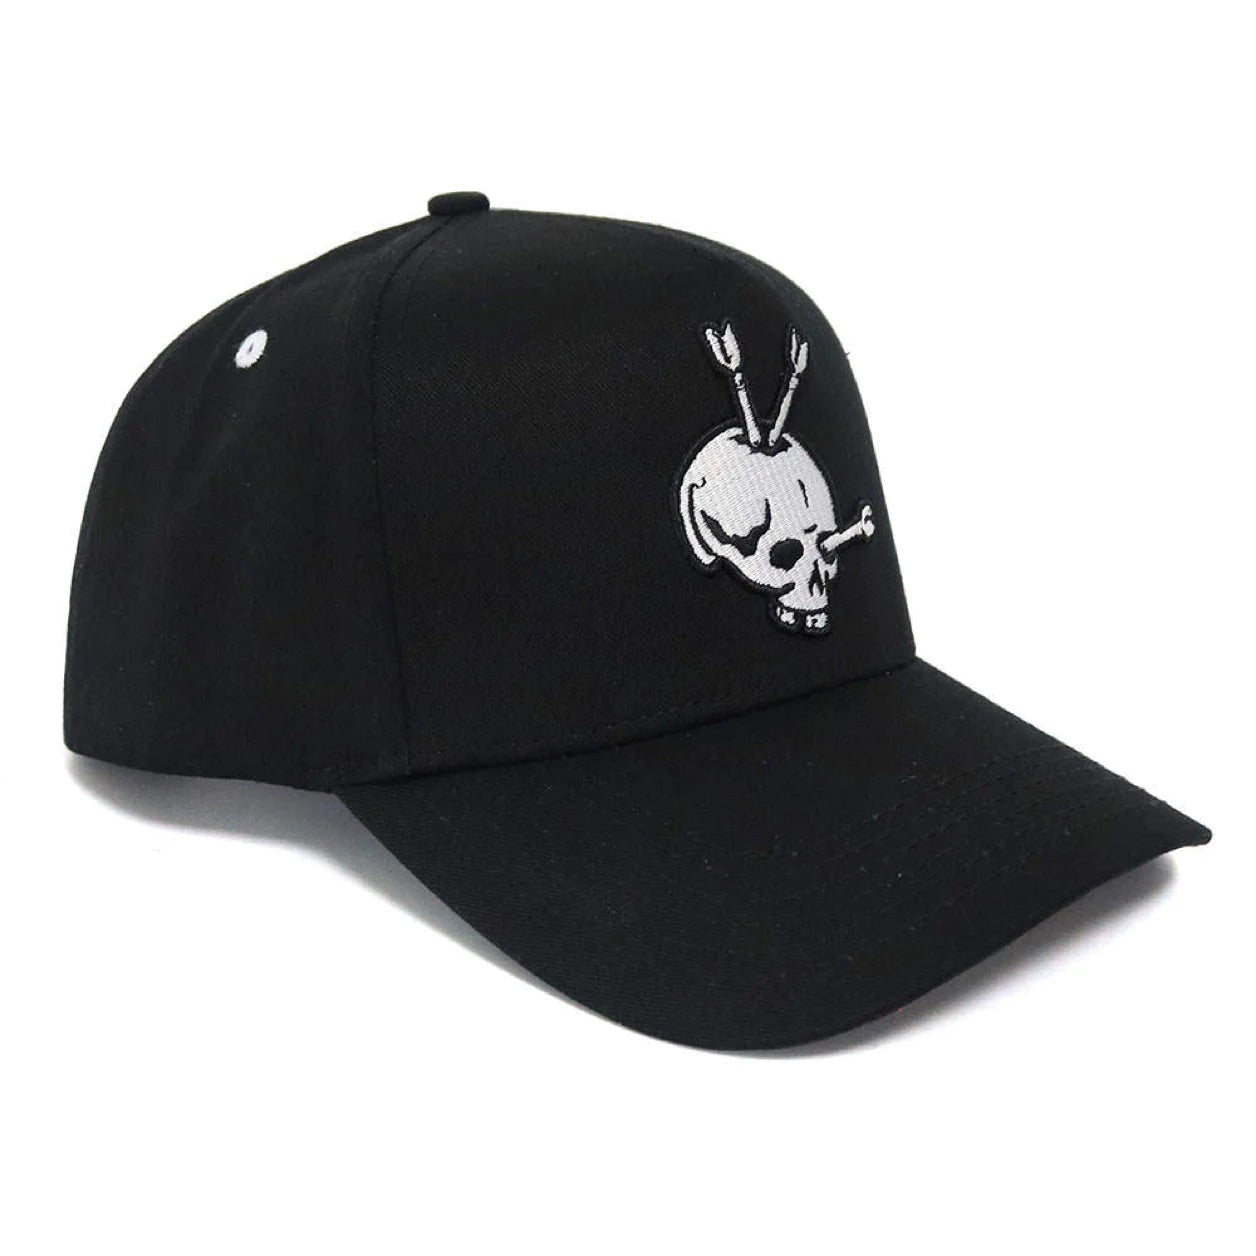 Benditto hat (black)